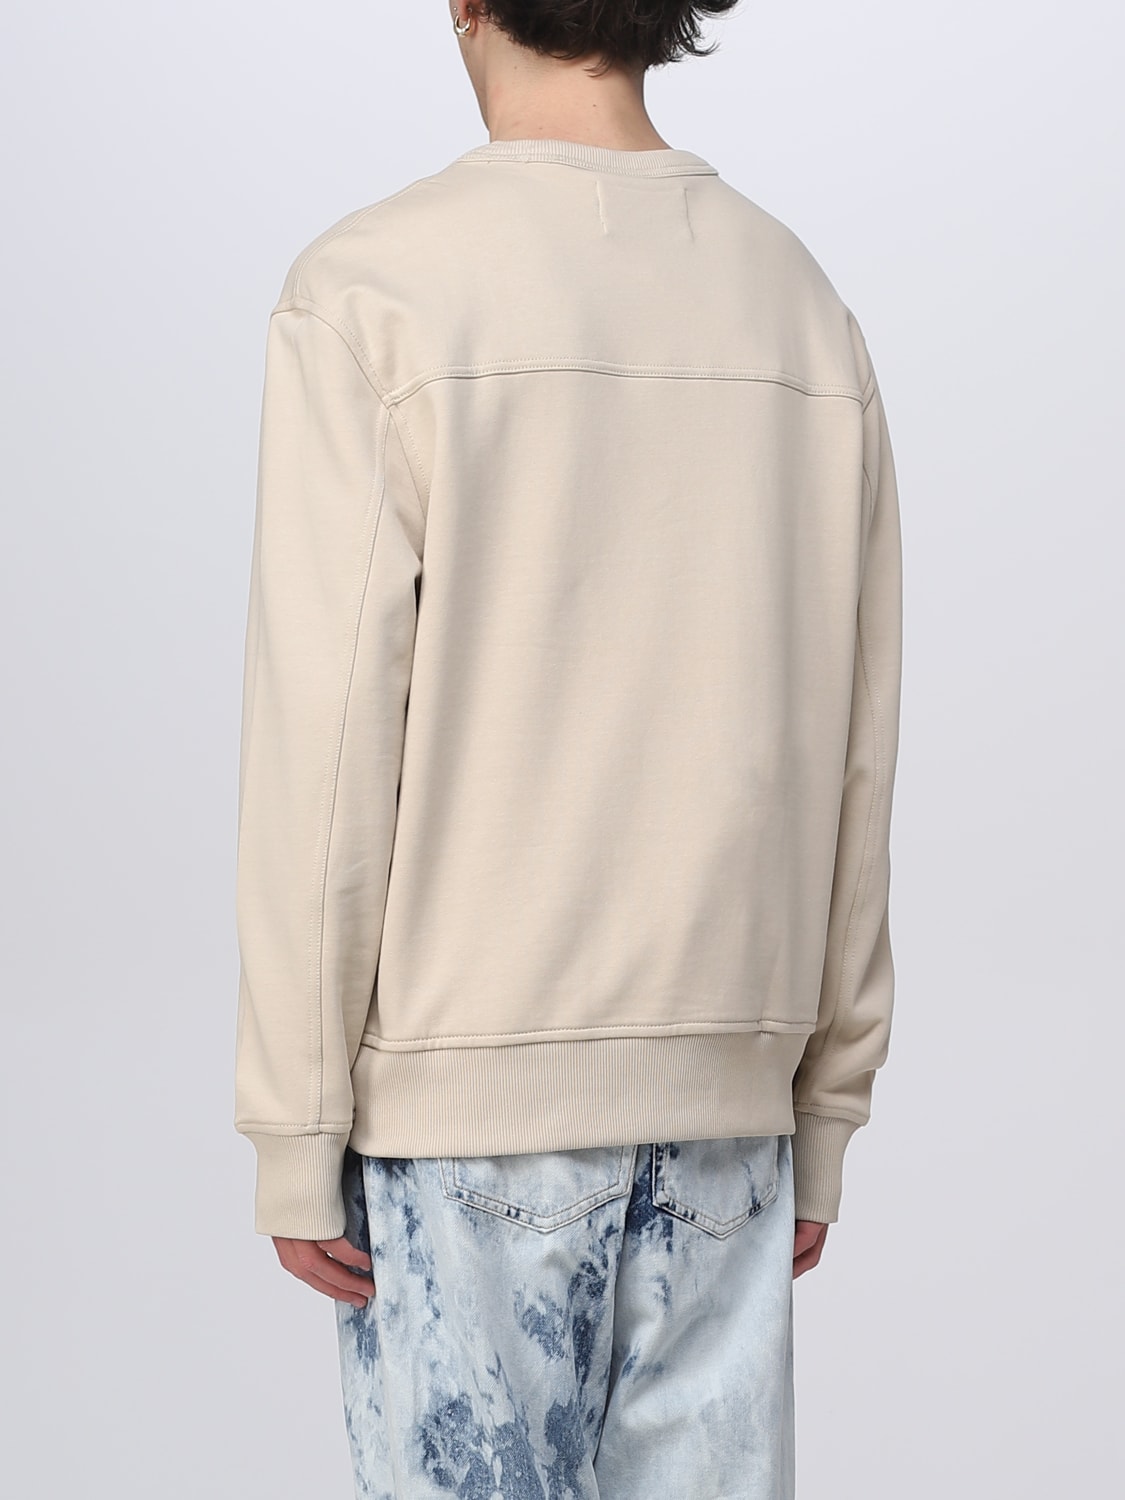 Incubus getuigenis Verrast CALVIN KLEIN JEANS: sweater for man - Beige | Calvin Klein Jeans sweater  J30J322886 online on GIGLIO.COM